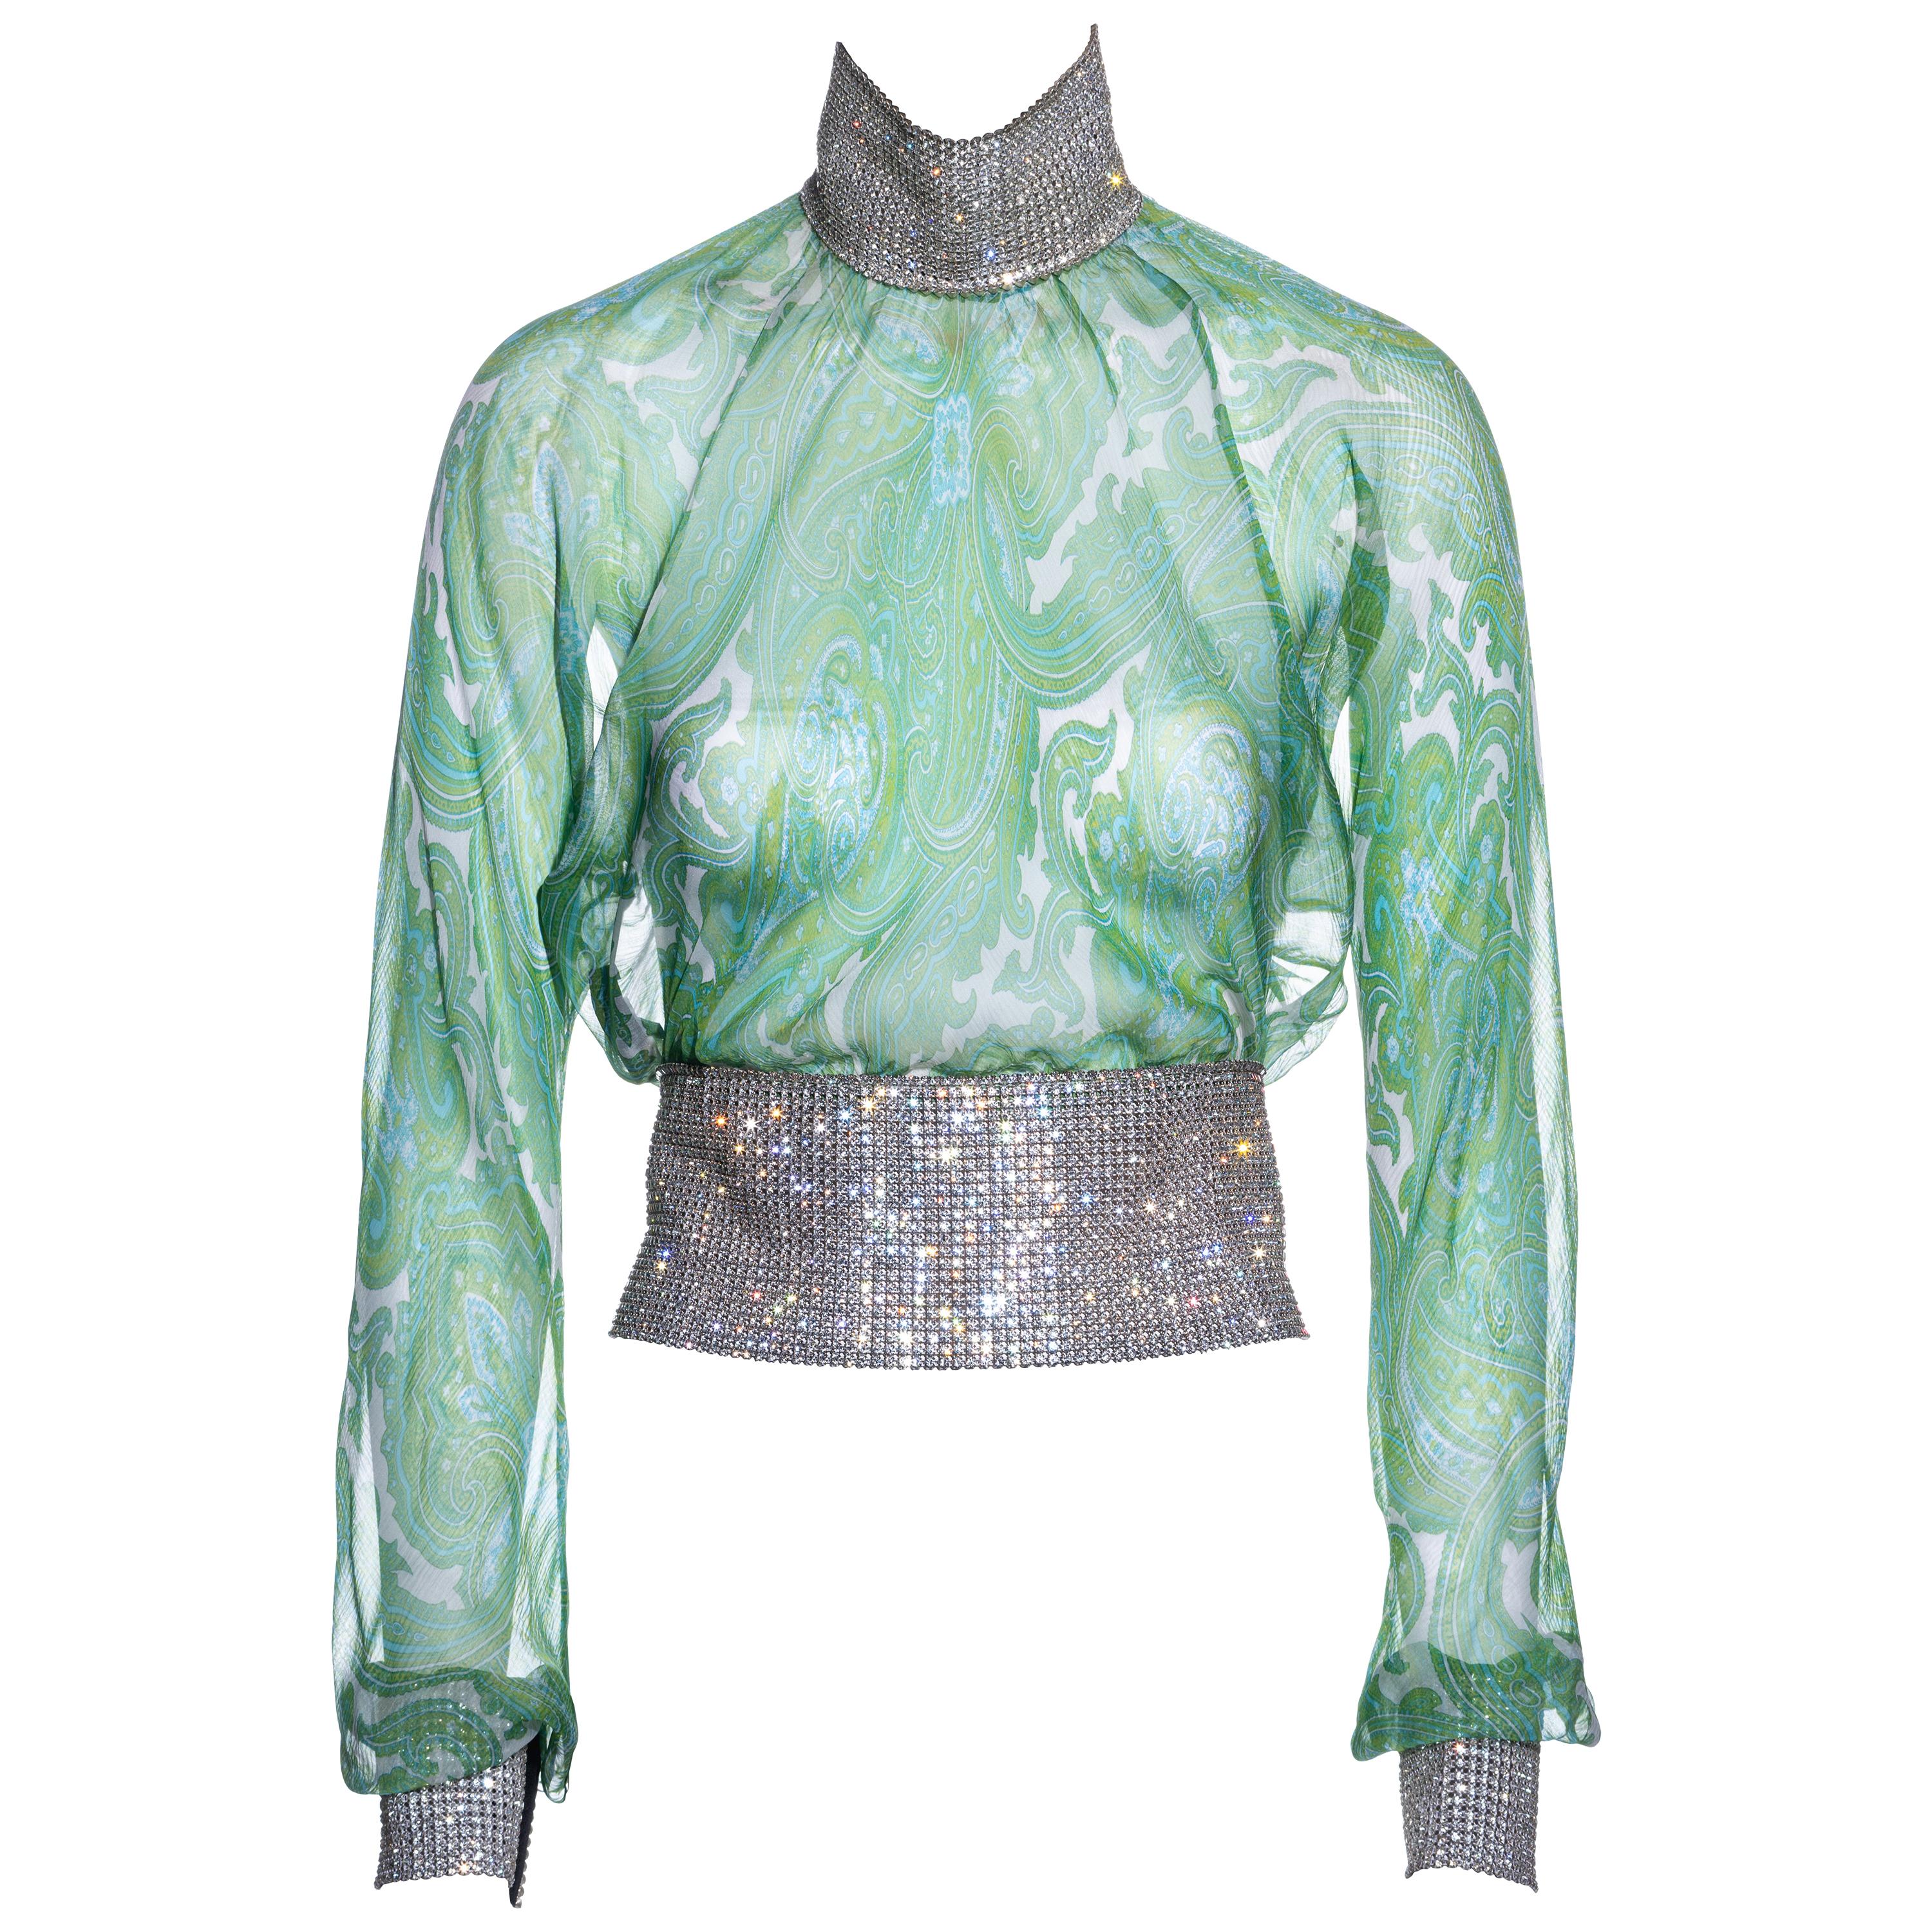 Dolce & Gabbana green paisley silk blouse with rhinestone mesh, ss 2000